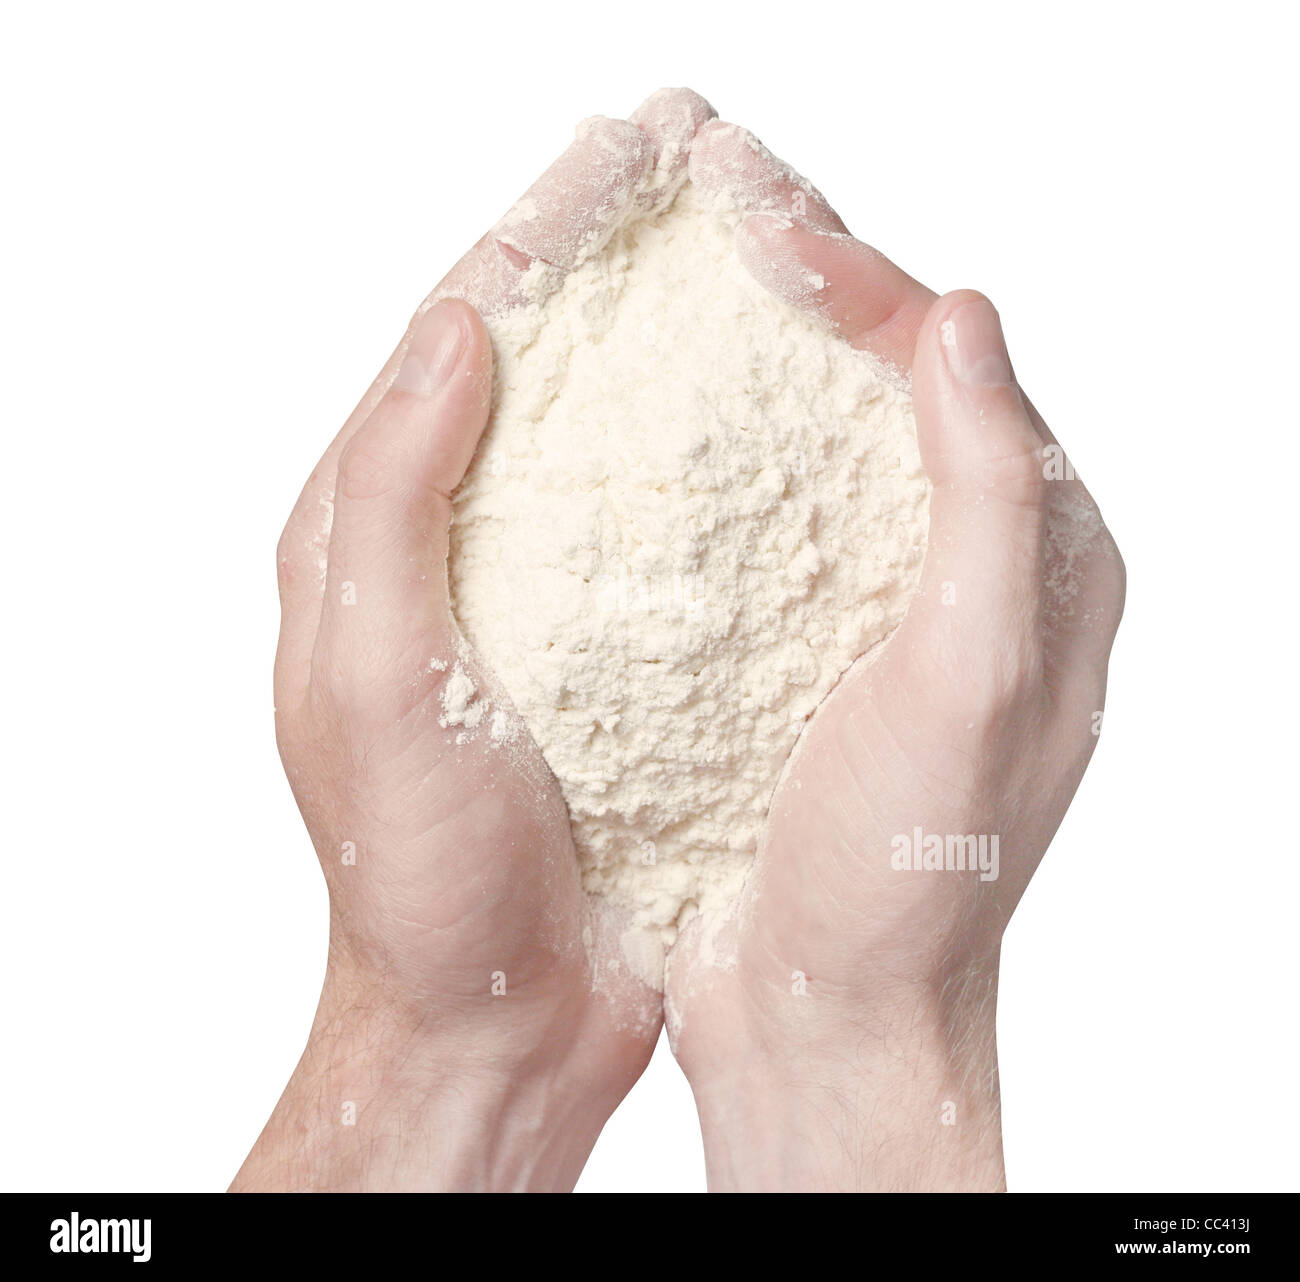 Hands holding white wheat flour Stock Photo